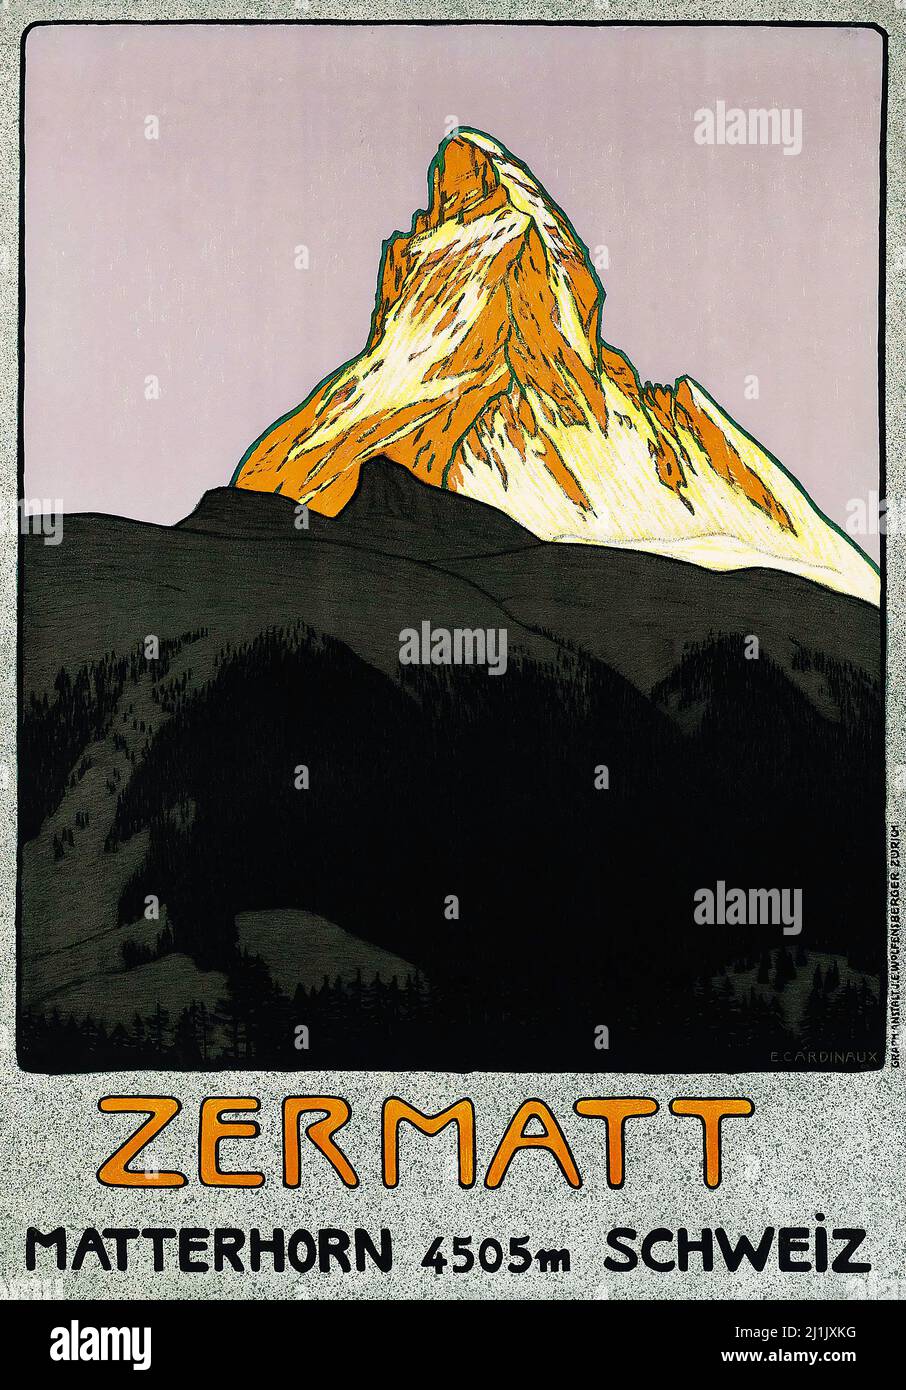 Zermatt - Cartel de viaje Vintage, Deportes de invierno, esquí - Schweiz, Suisse, Suiza, Swiss - obra de Emil Cardinaux (1877-1936) Foto de stock